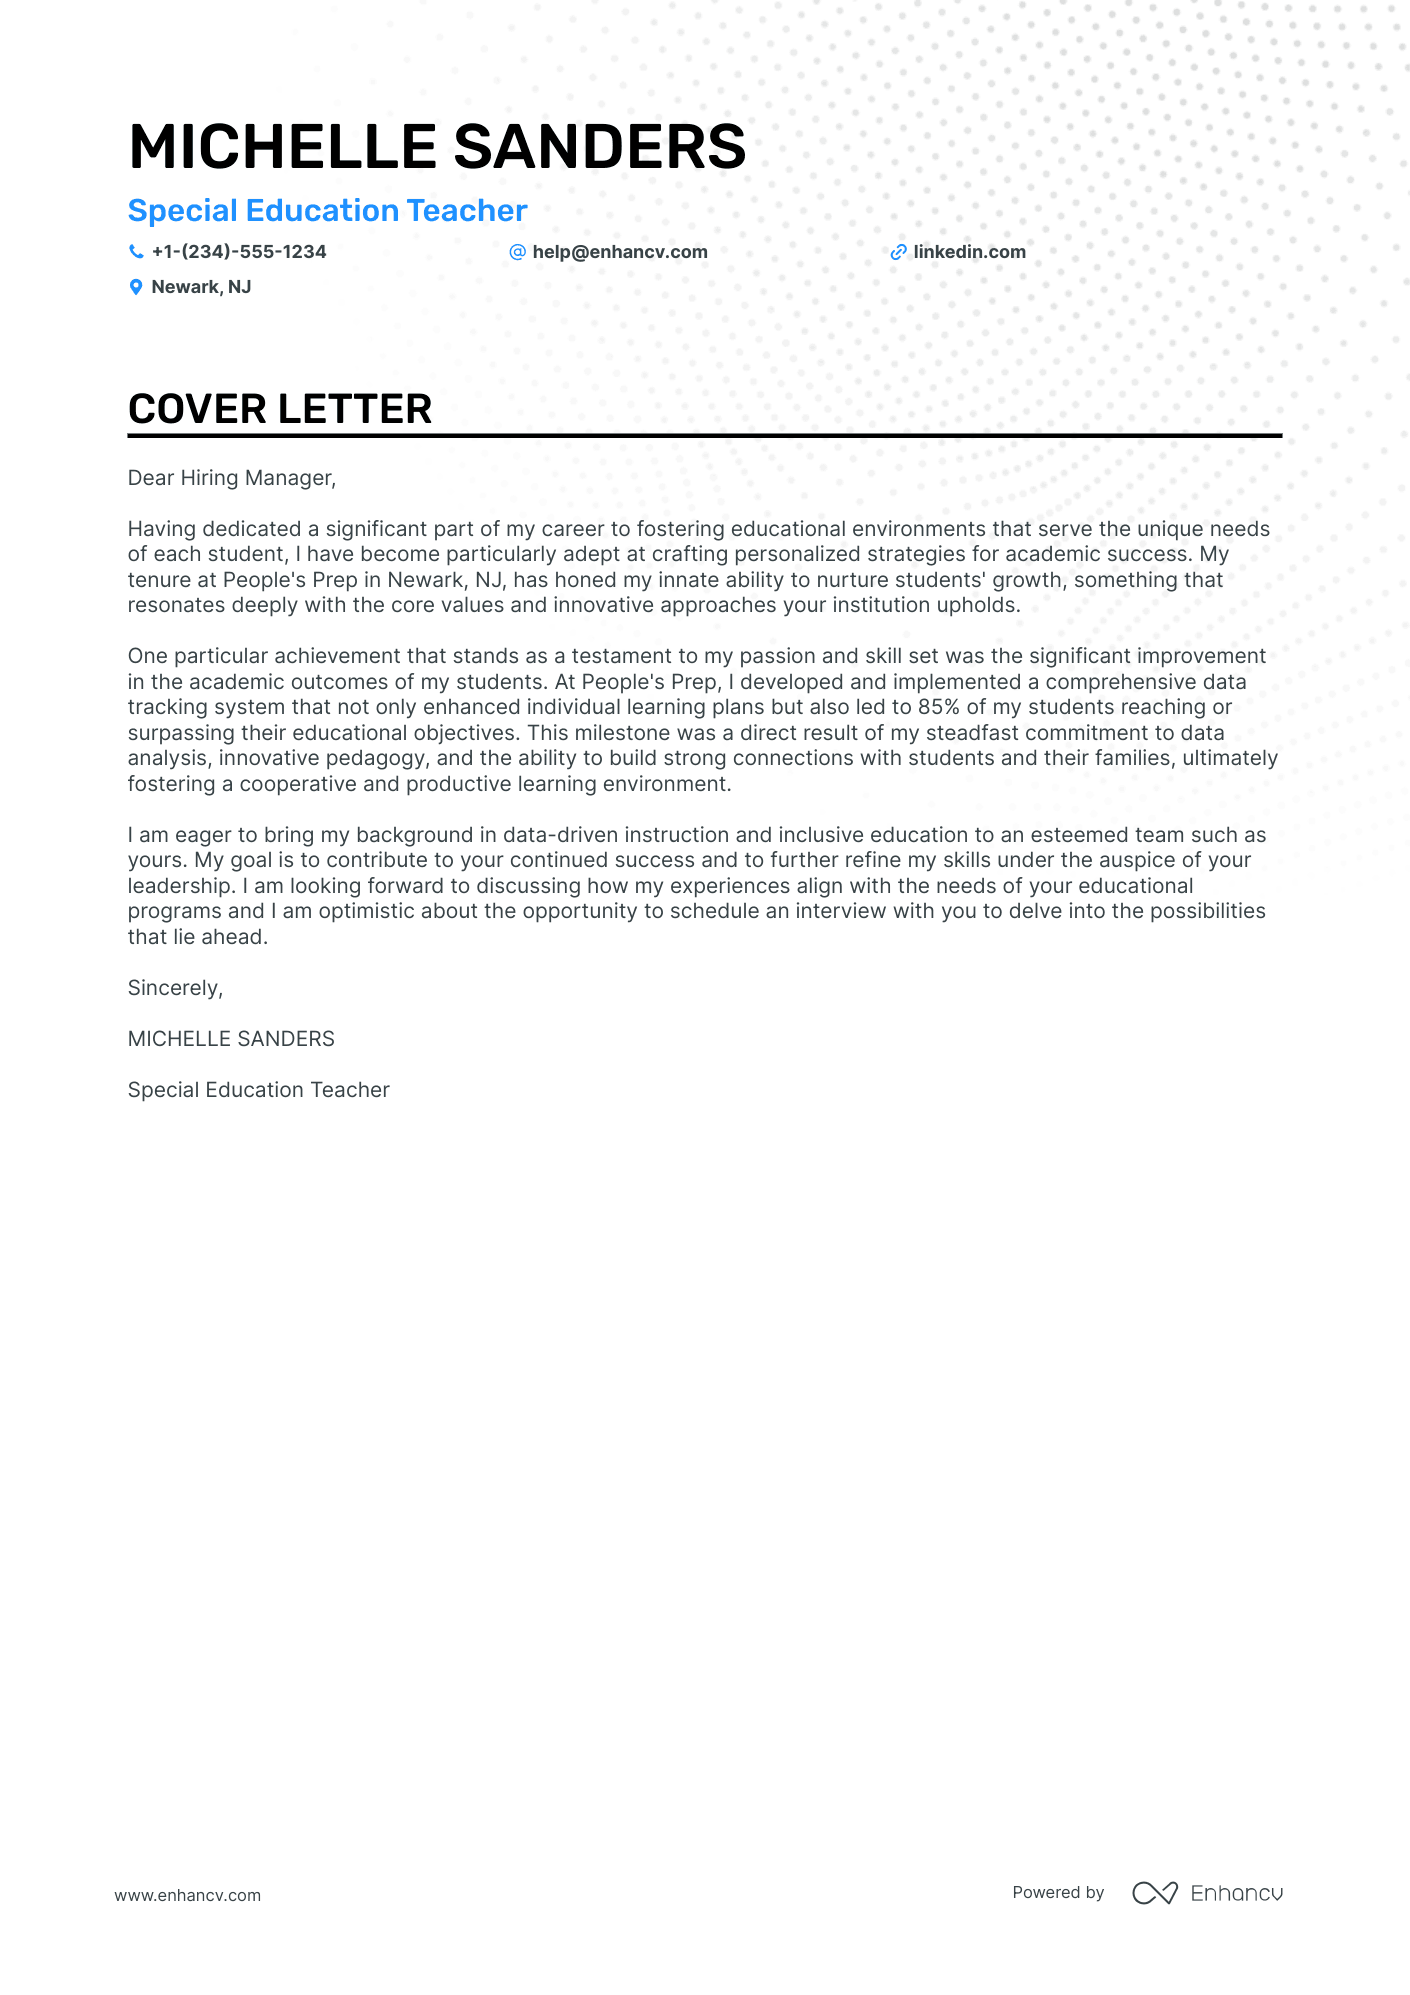 Special Education Teacher cover letter